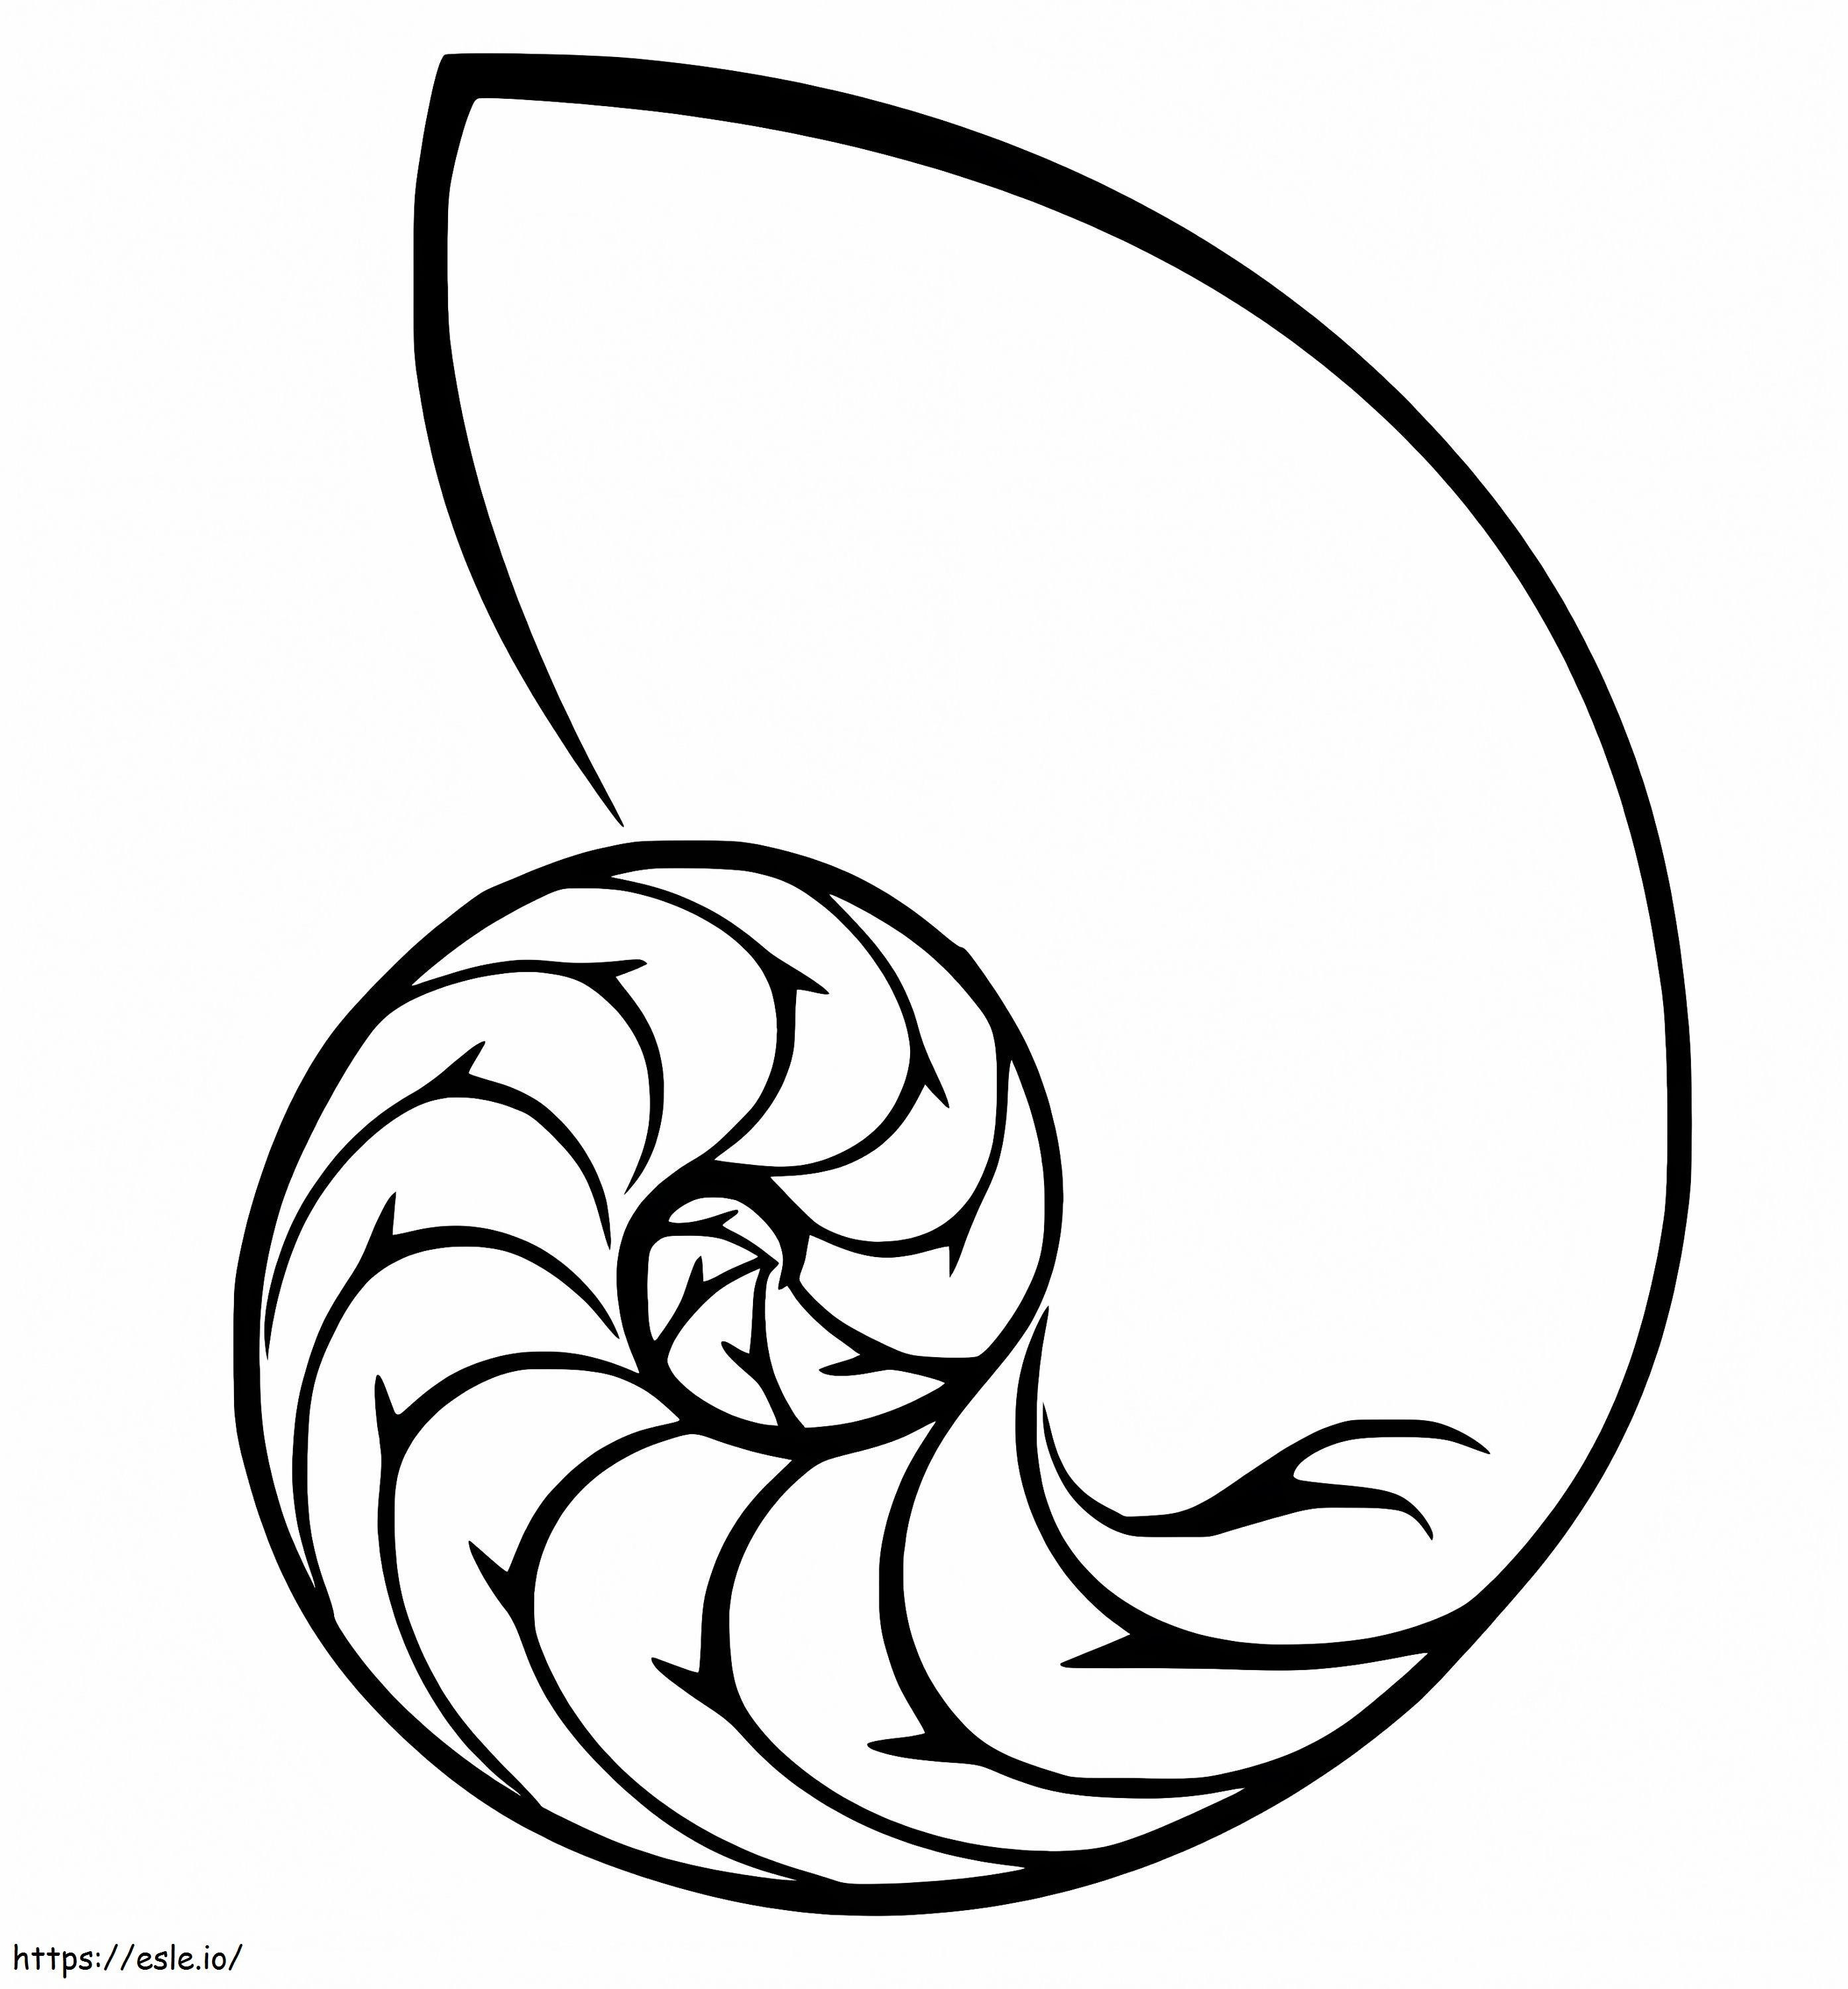 Concha de Nautilus imprimible para colorear